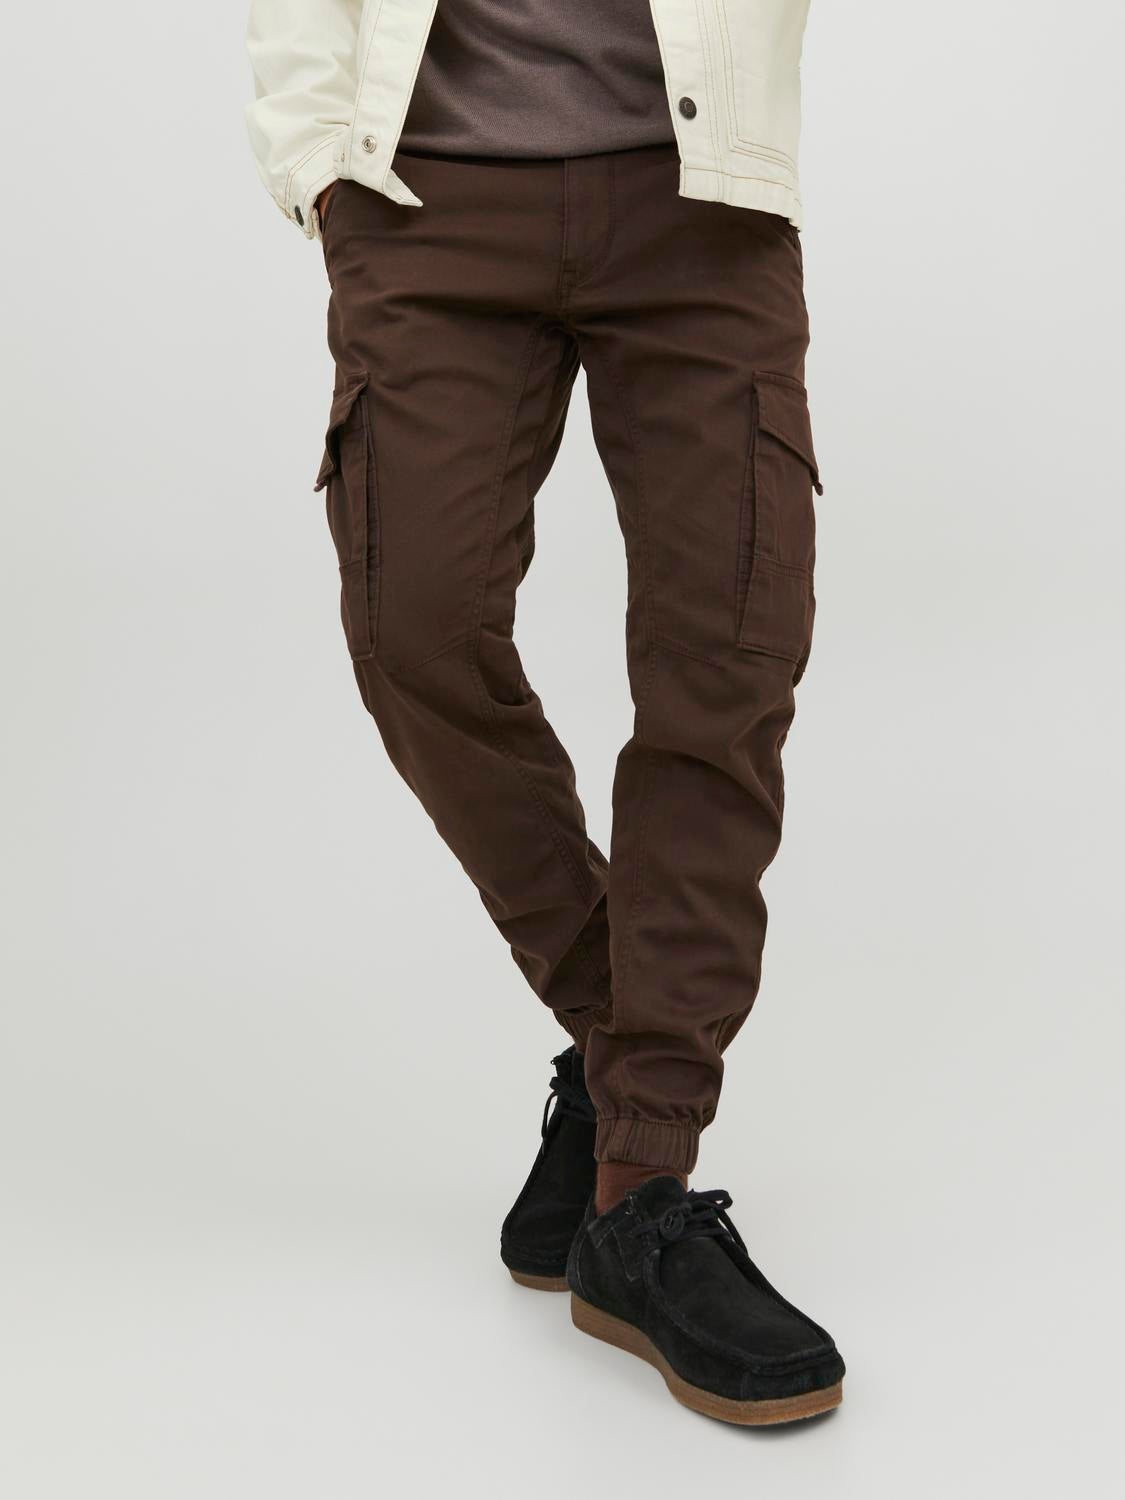 PT50CB Jean Cut Chocolate Brown Work Pants